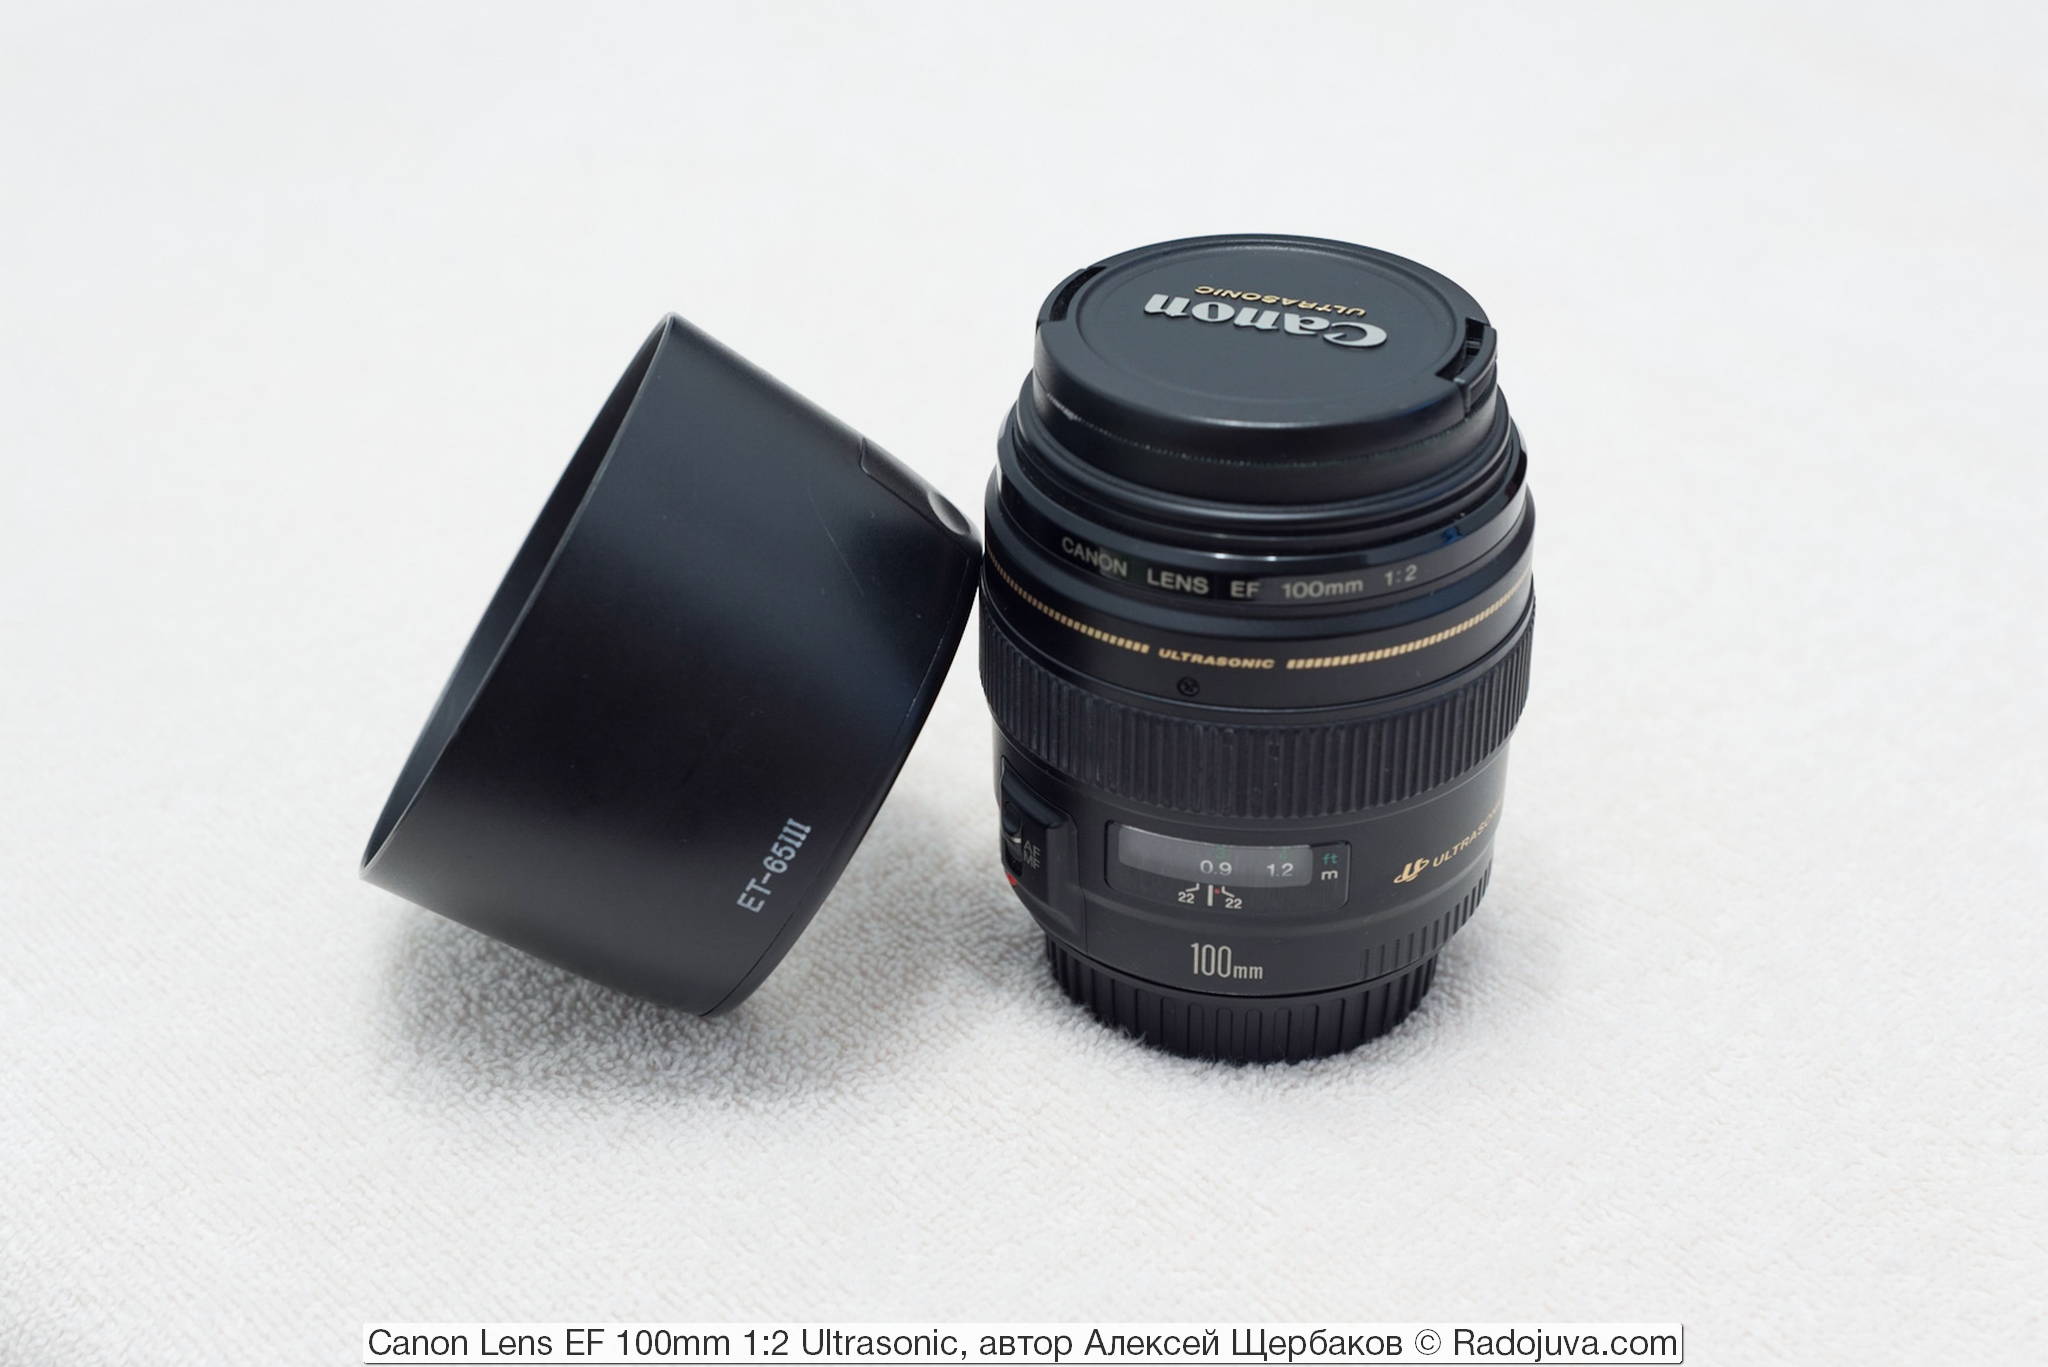 Canon Lens EF 100mm 1:2 Ultrasonic